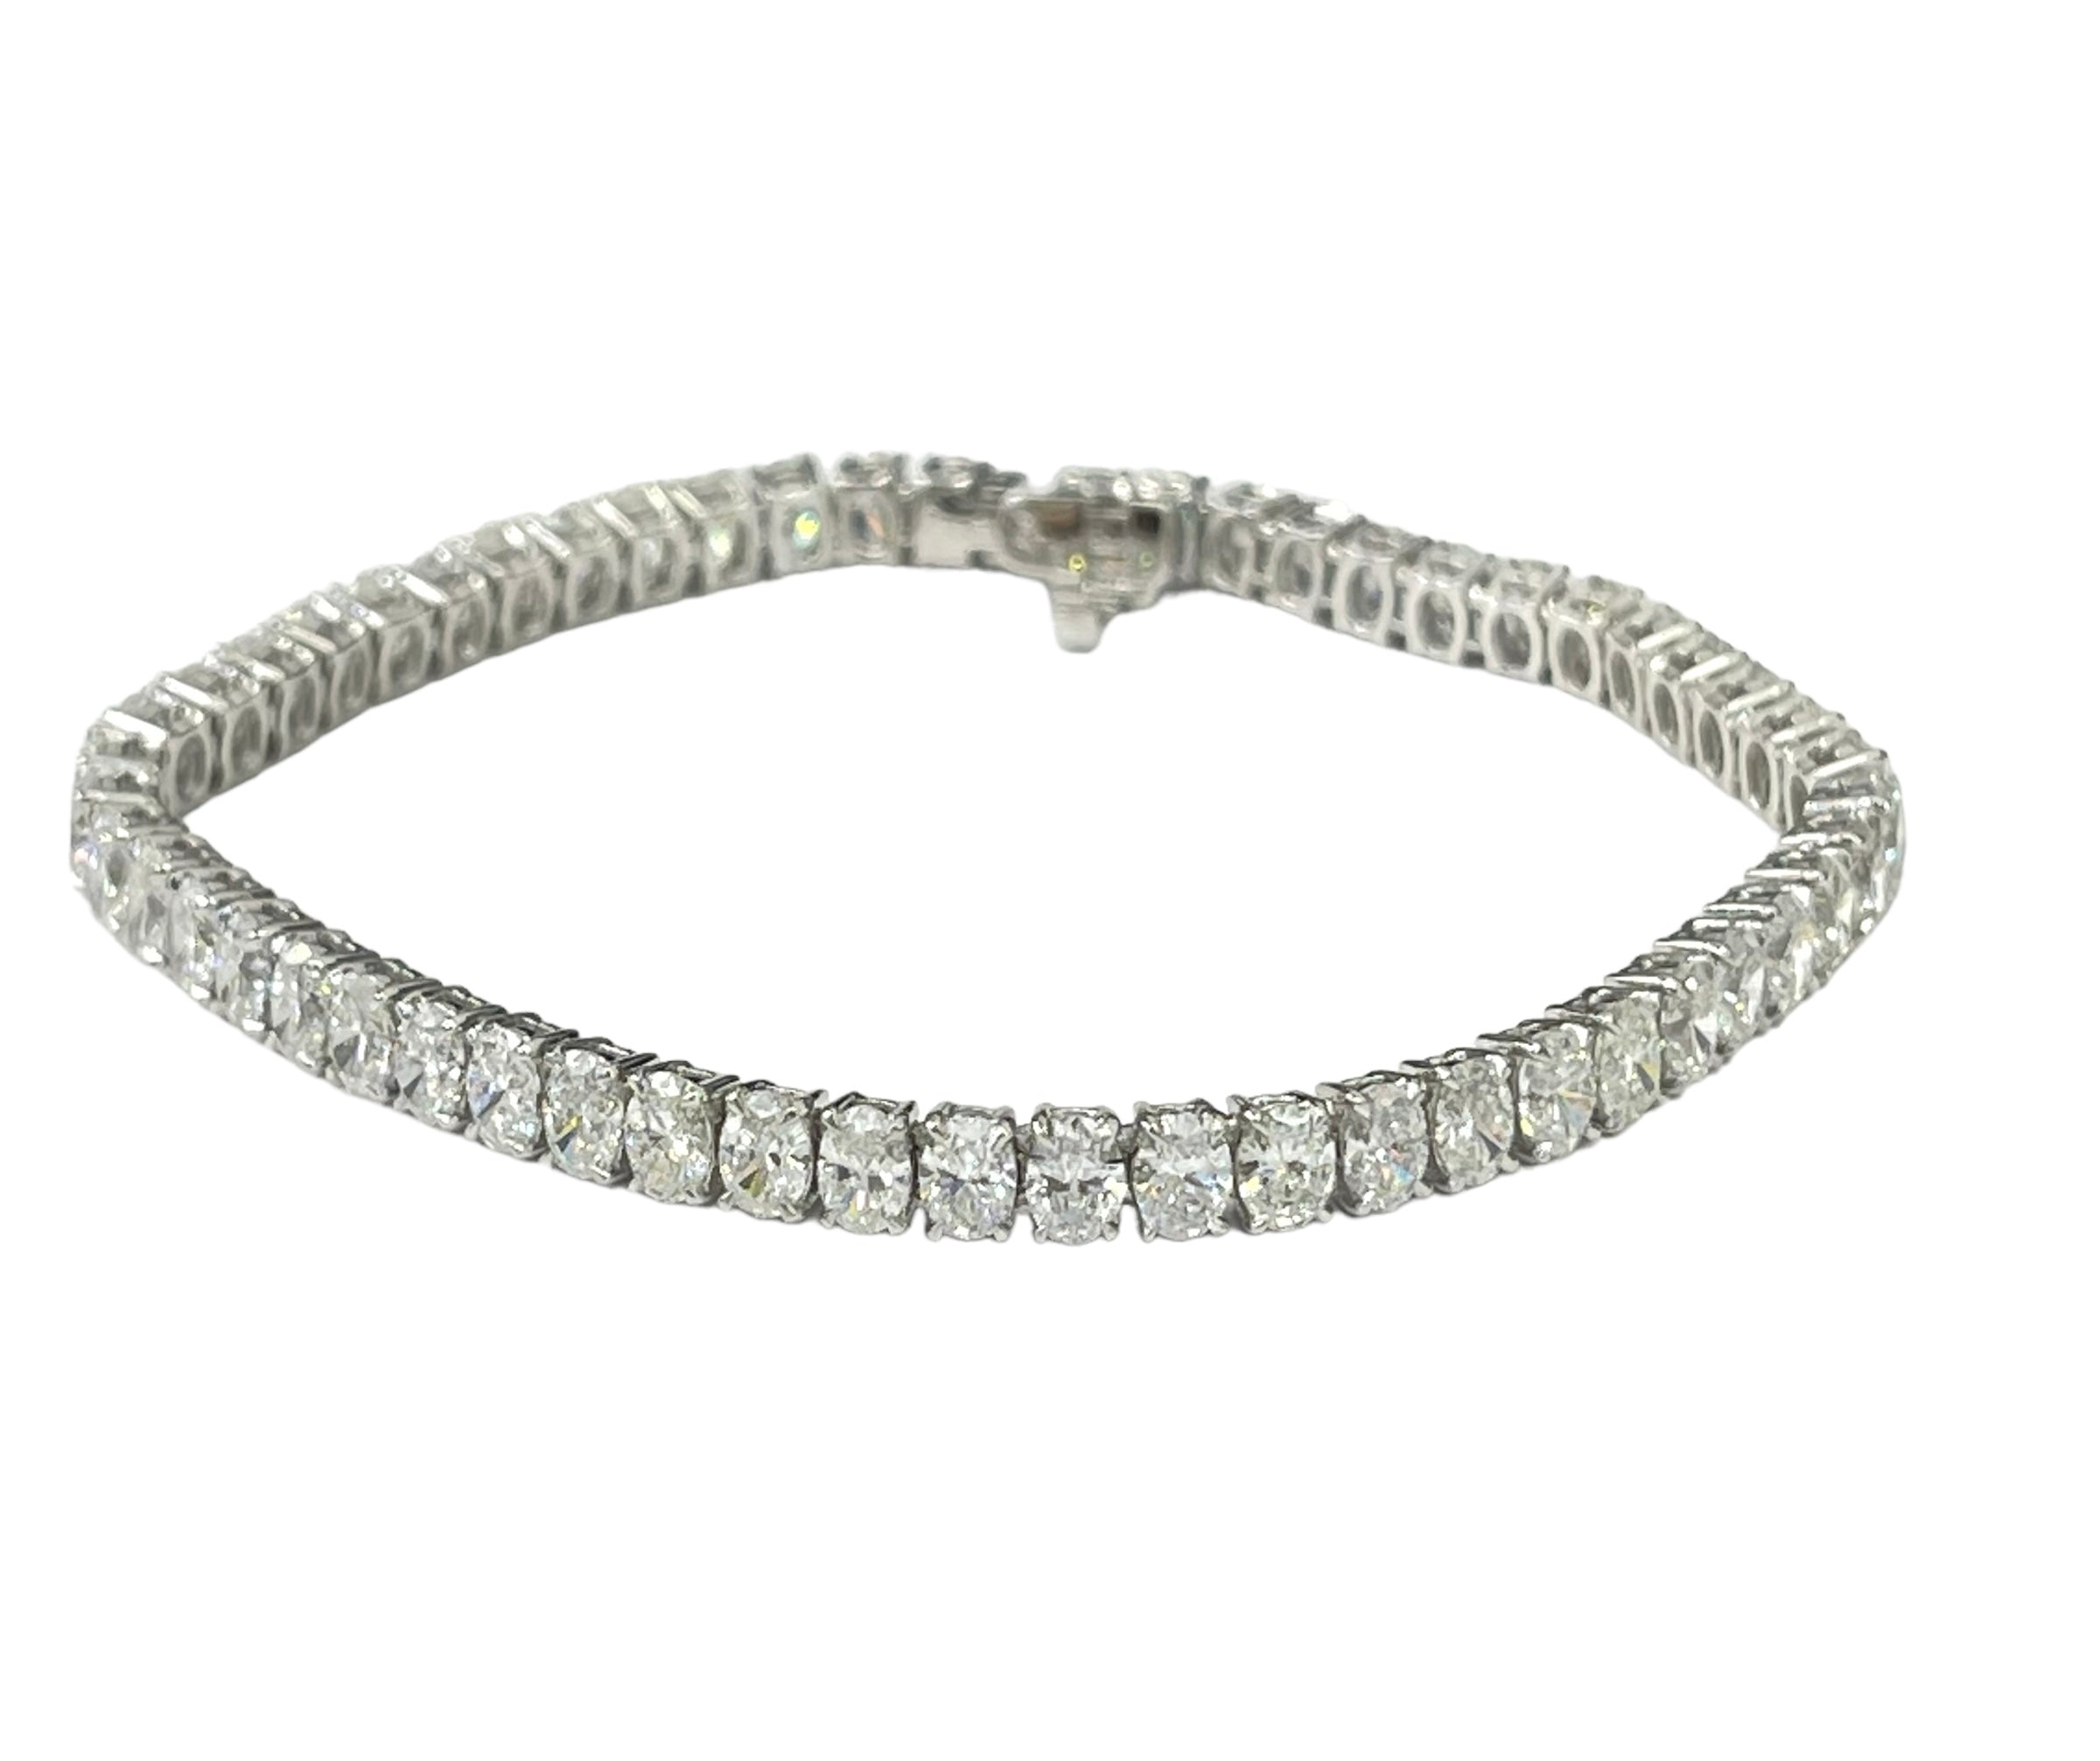 Oval Brilliants Diamond Tennis Bracelet White Gold 18kt